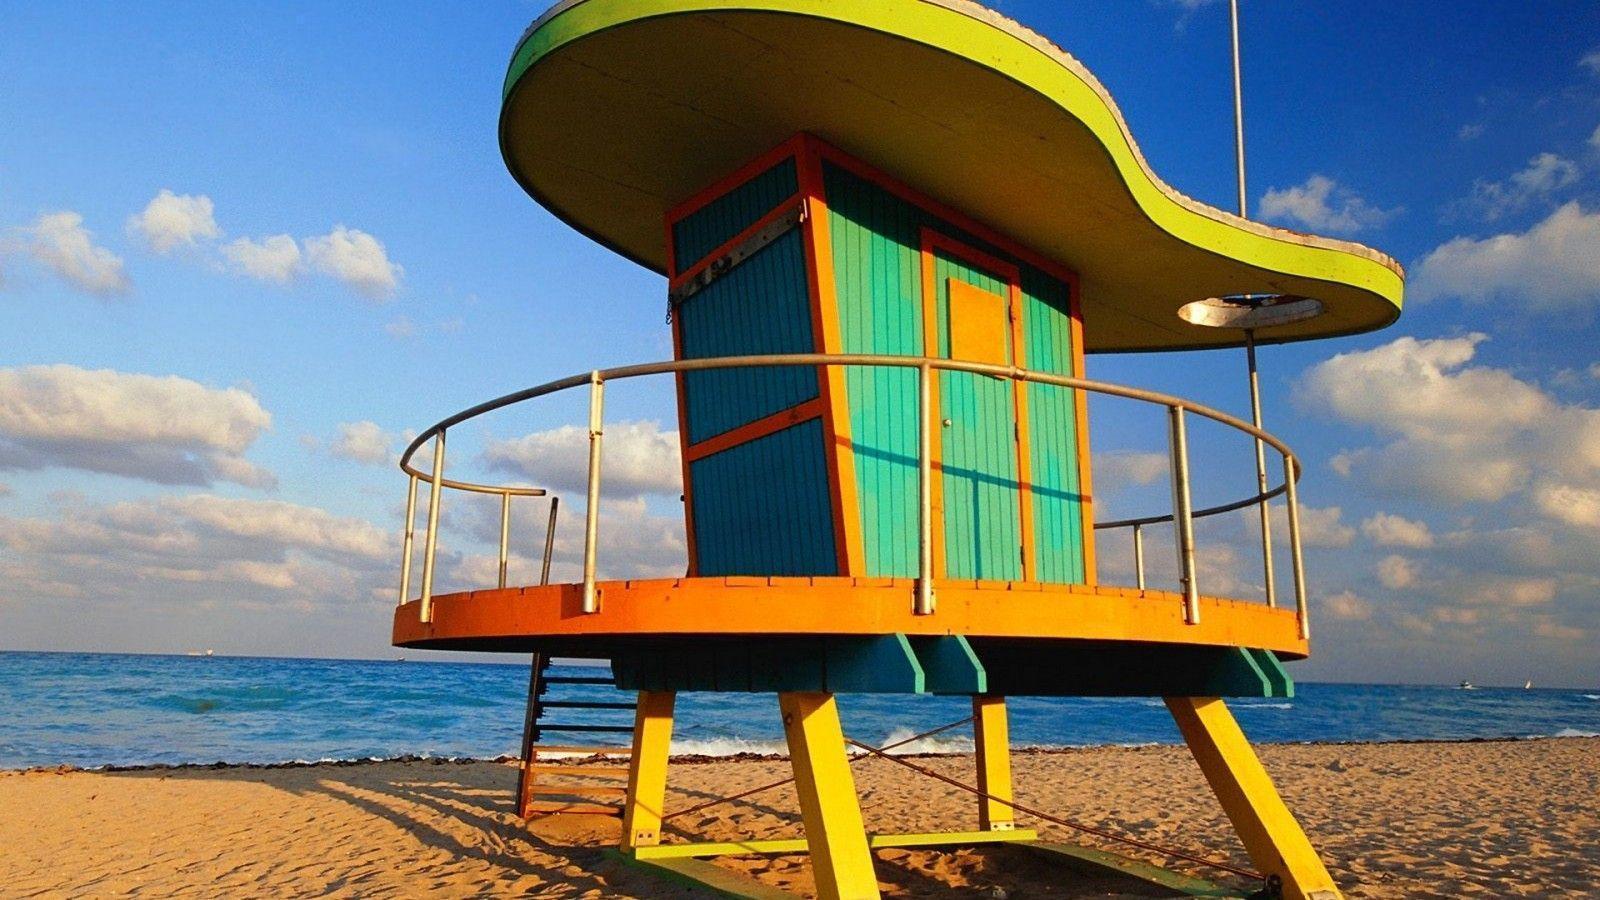 Beach Station in Miami, Florida widescreen wallpaper. Wide